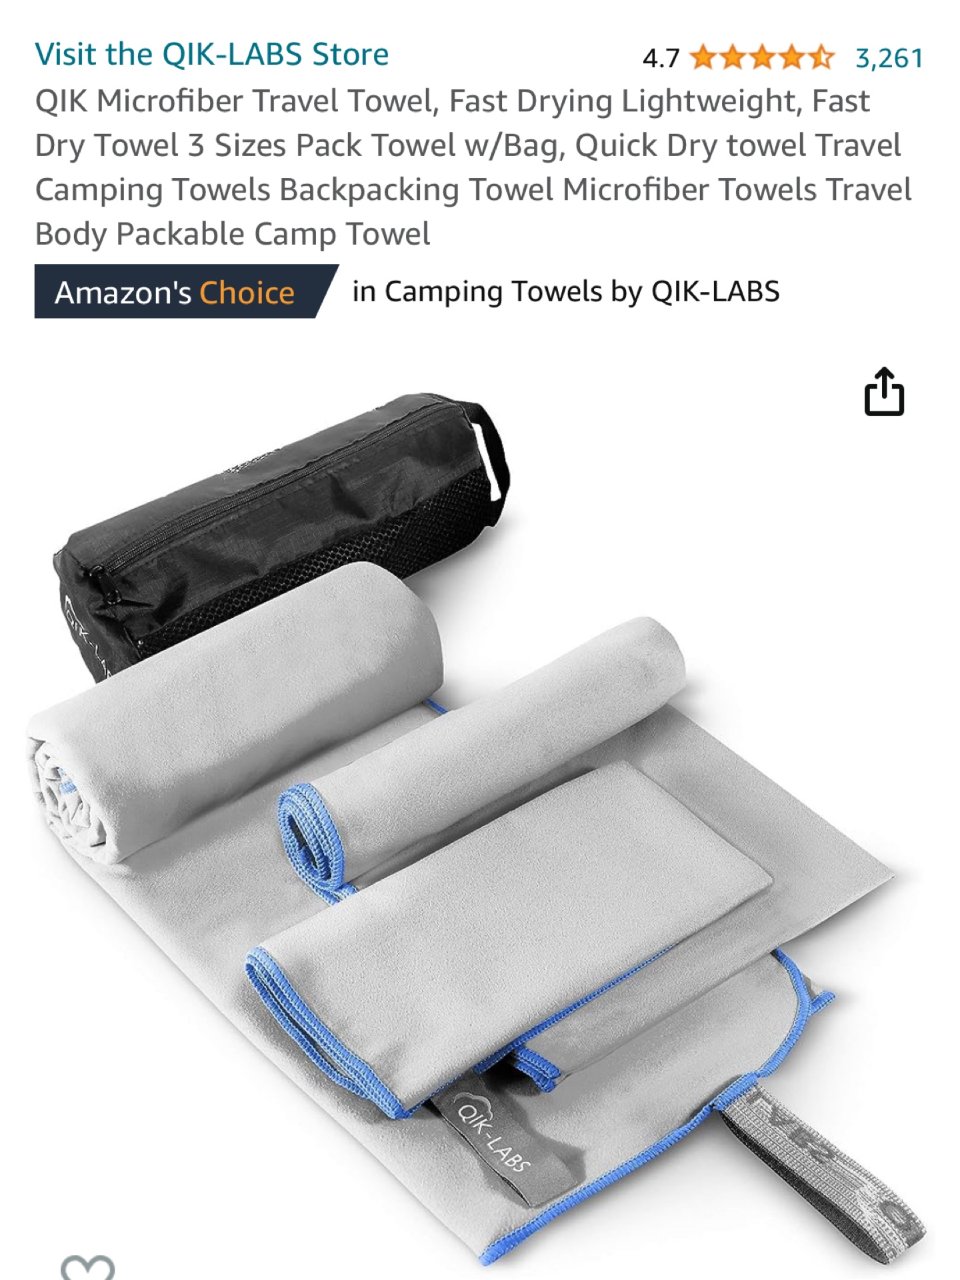 QIK Microfiber Travel Towel, Fast Drying Lightweight, Fast Dry Towel 3 Sizes Pack Towel w/Bag, Quick Dry towel Travel Camping Towels Backpacking Towel Microfiber Towels Travel Body Packable Camp Towel : Sports & Outdoors